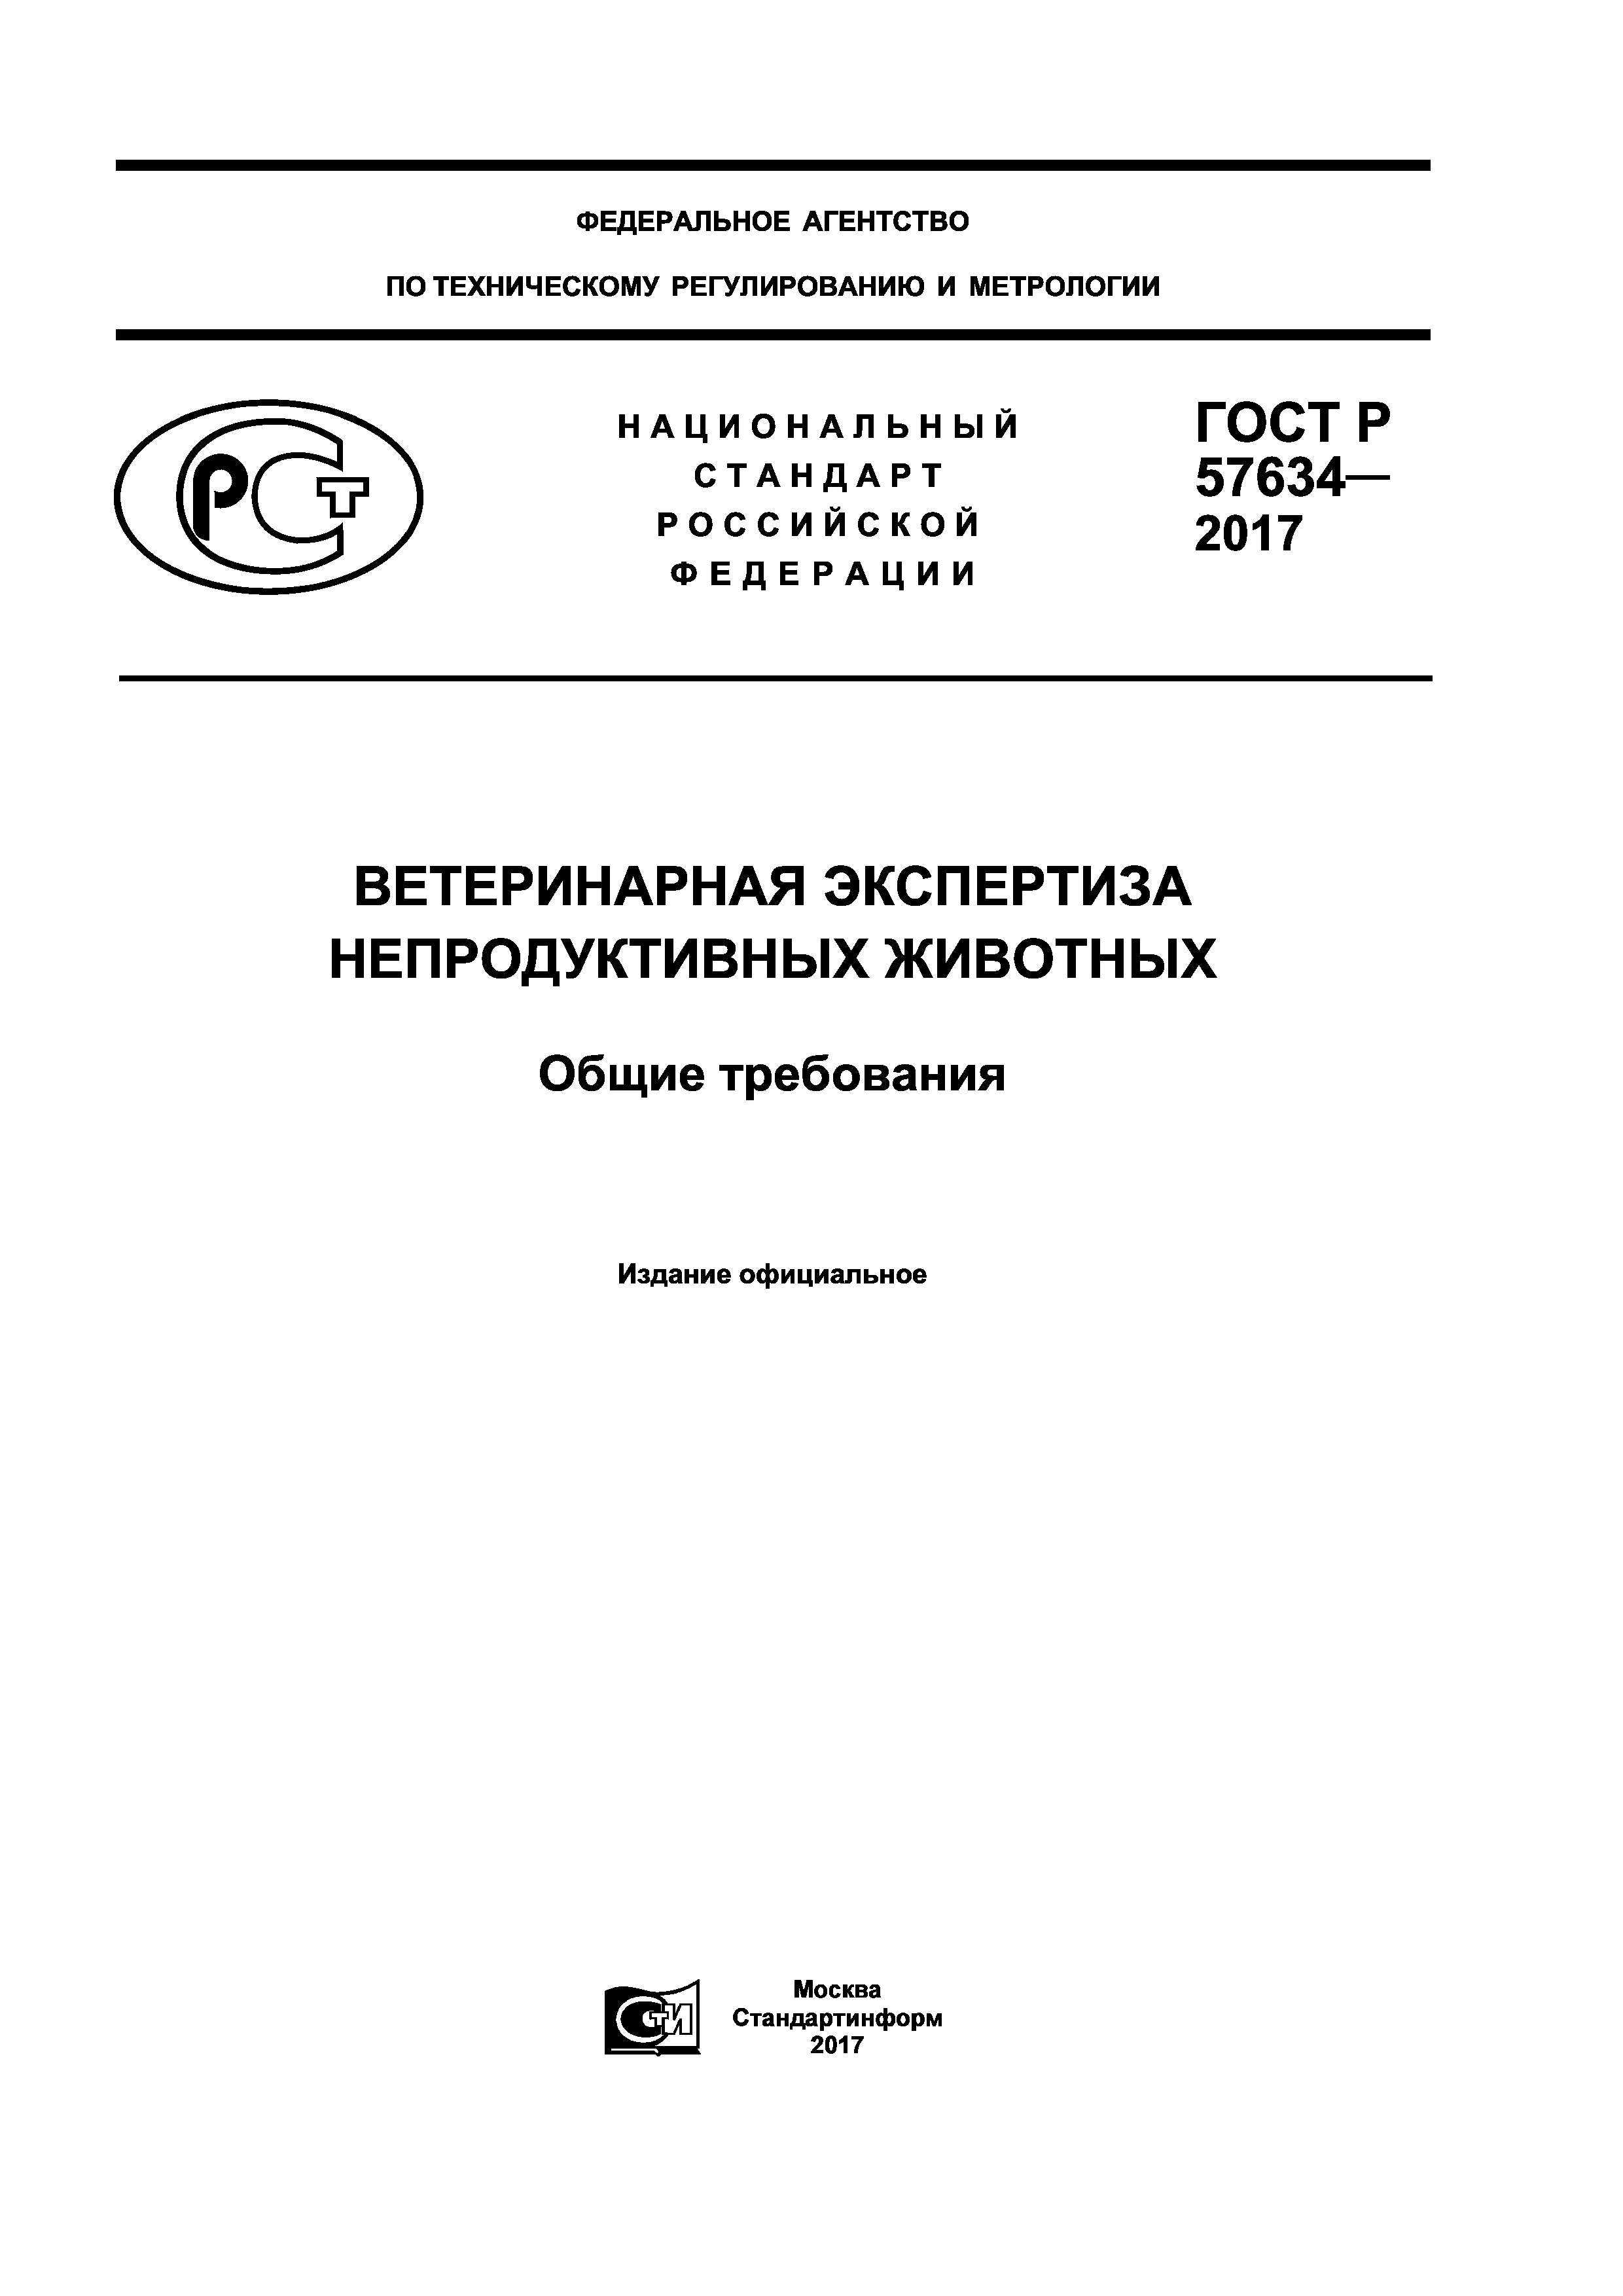 ГОСТ Р 57634-2017